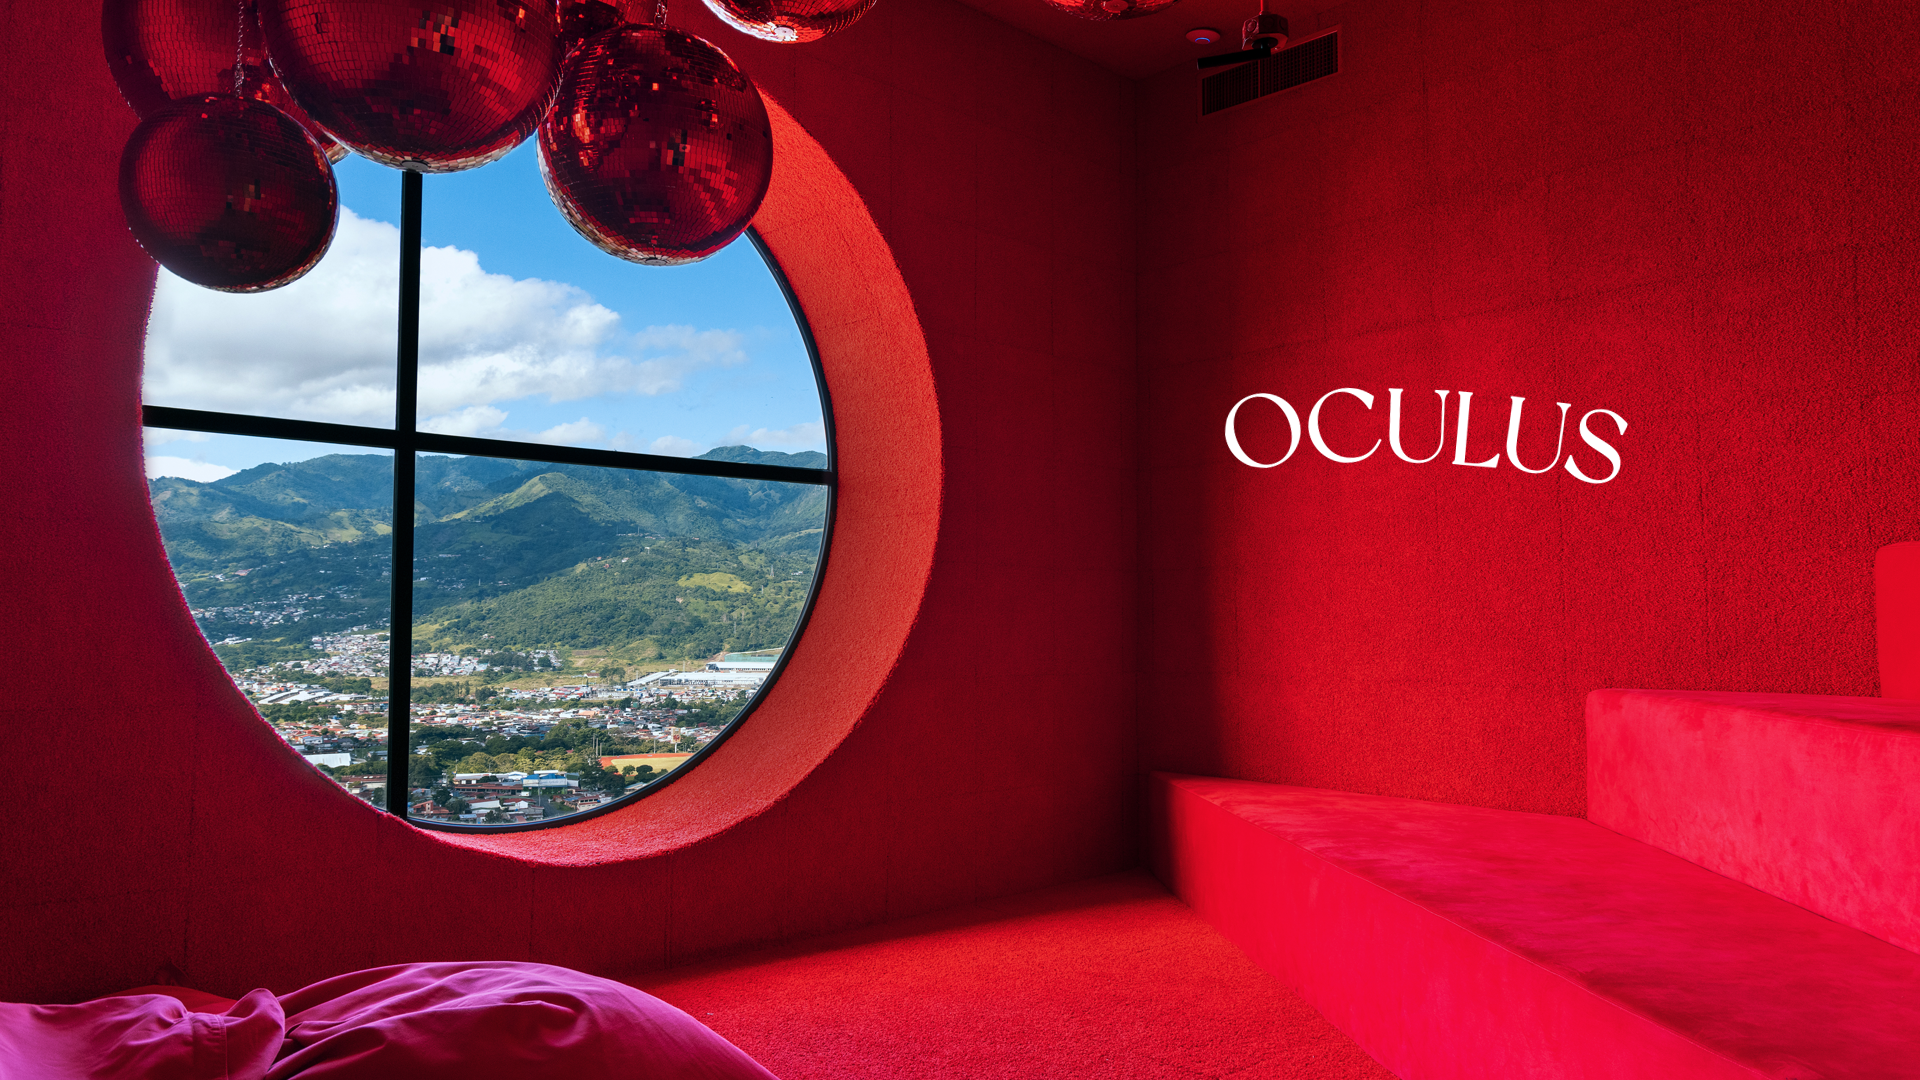 oculus.png